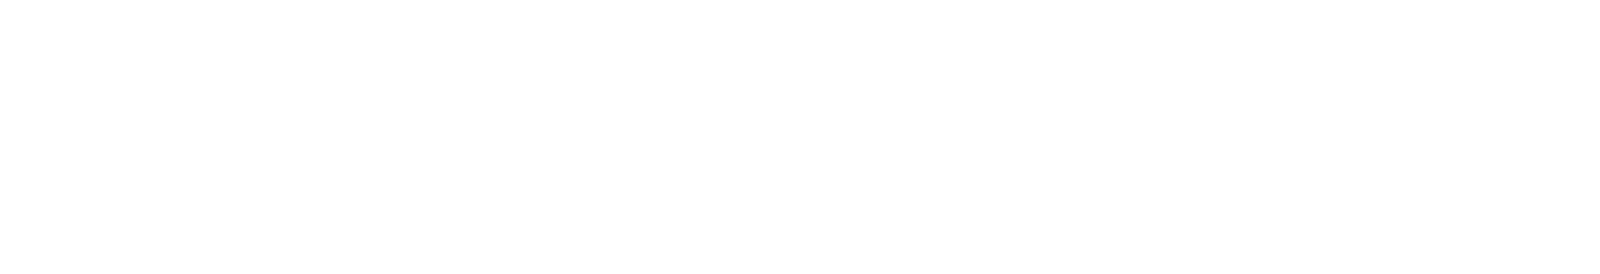 Dennis & Nelson Insurance Group, Zanesville